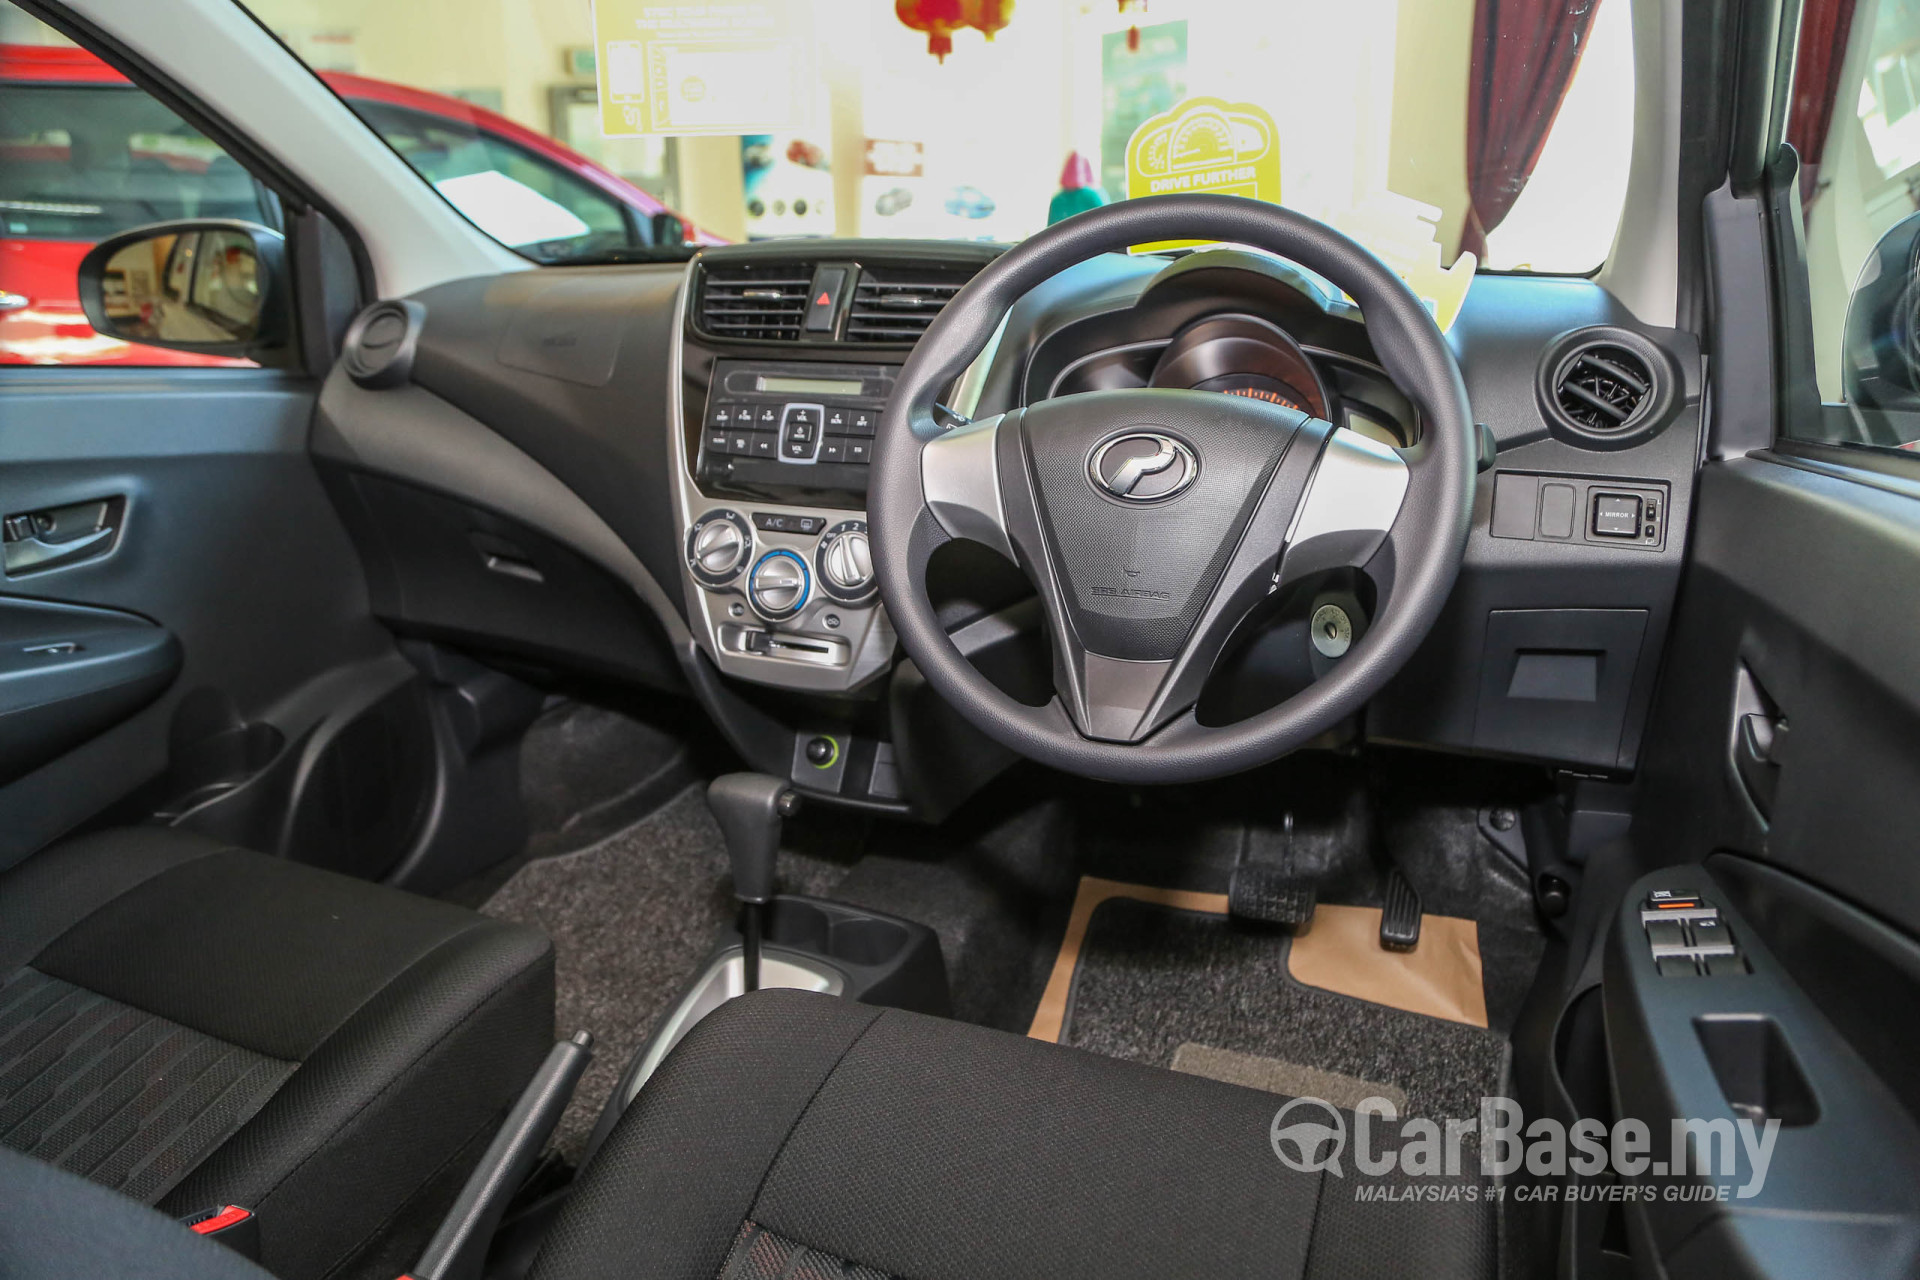 Perodua Axia Mk1 Facelift (2017) Interior Image #35117 in 